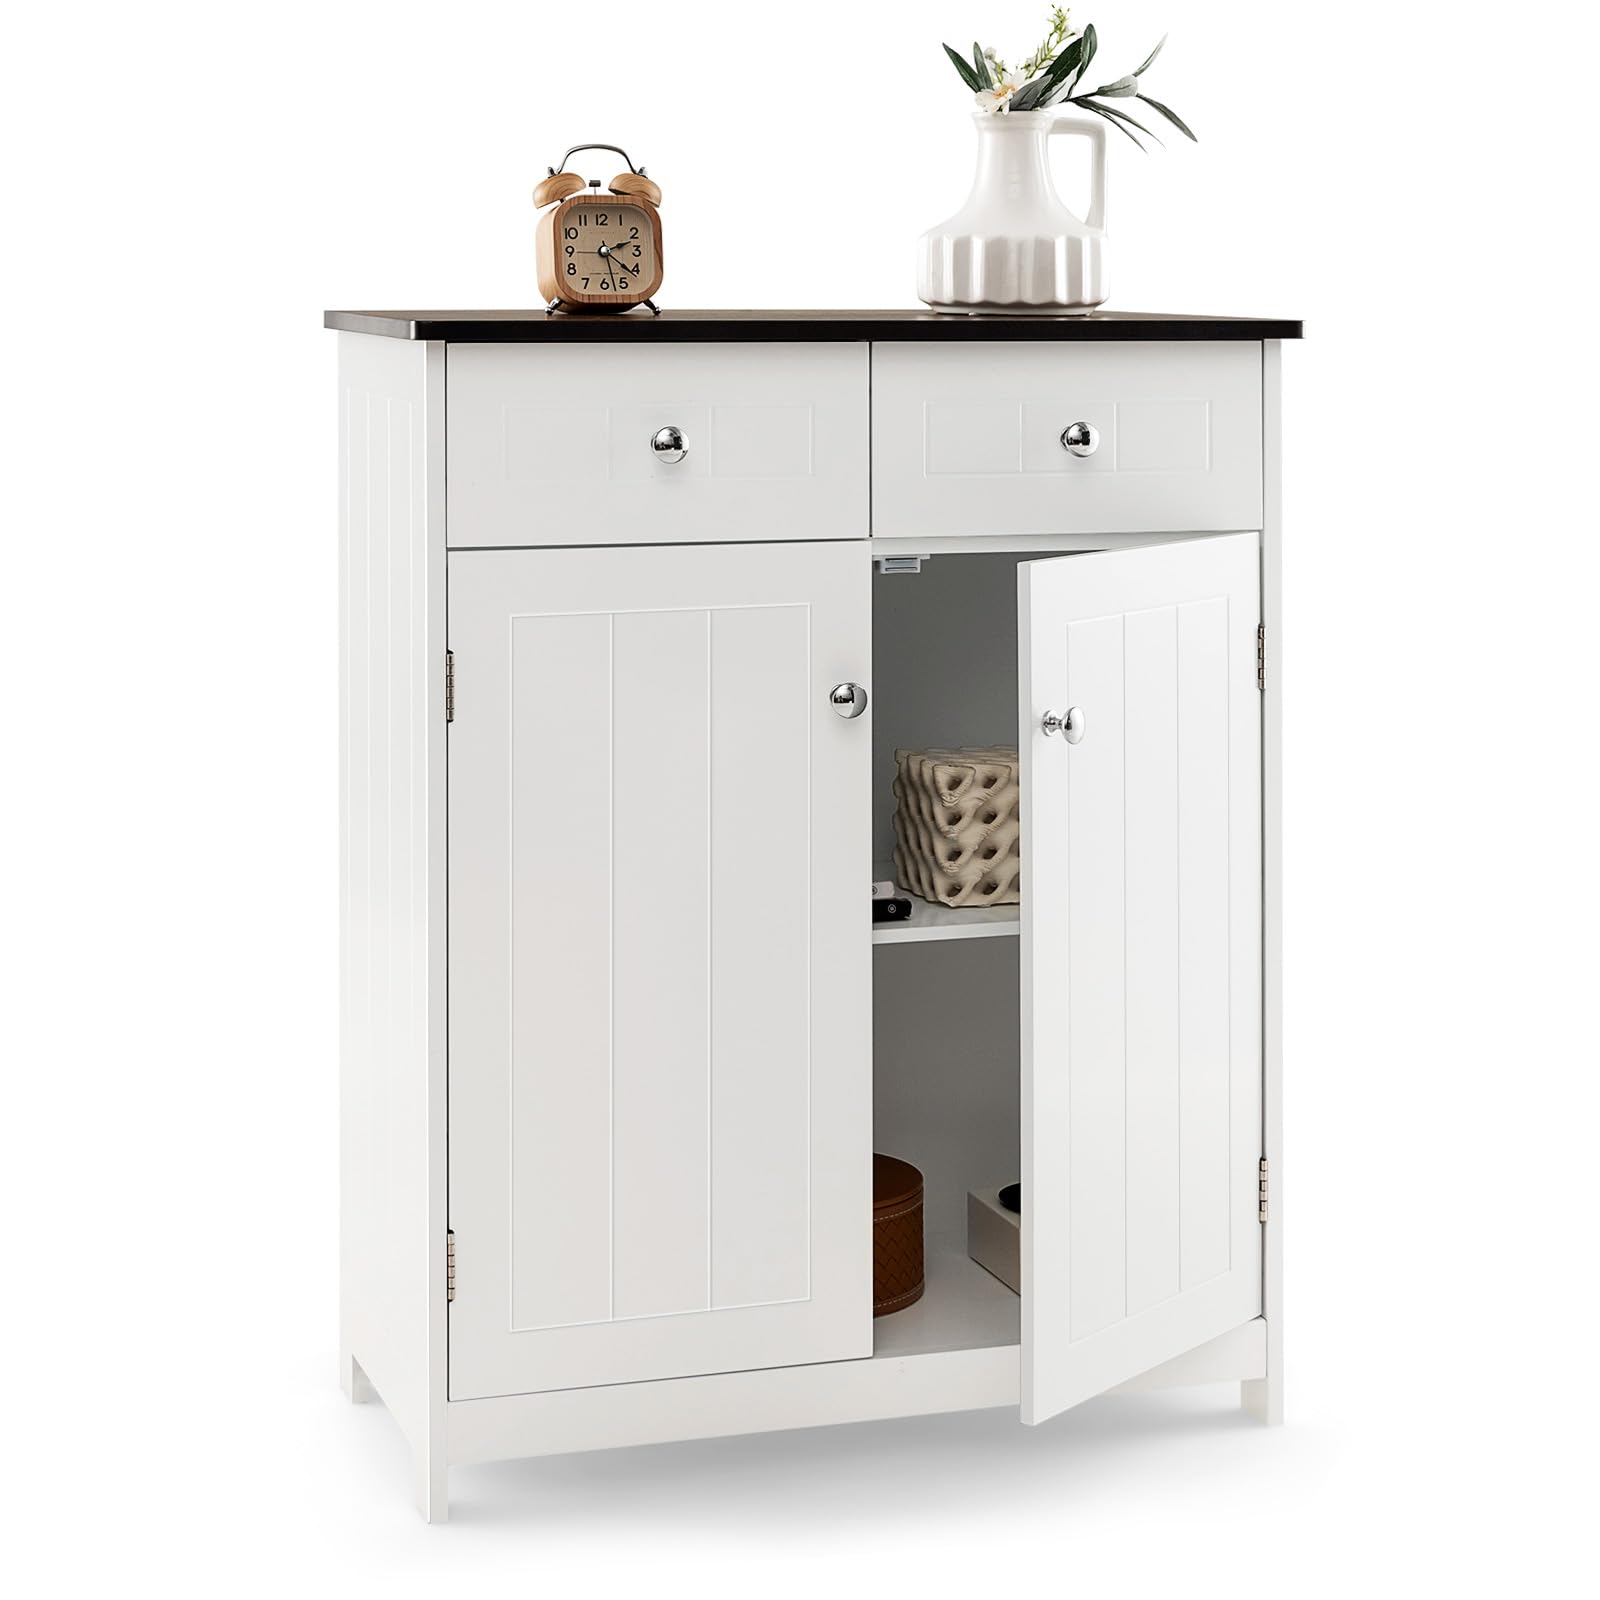 Giantex Bathroom Storage Cabinet with Drawers - Floor Cabinet with Doors